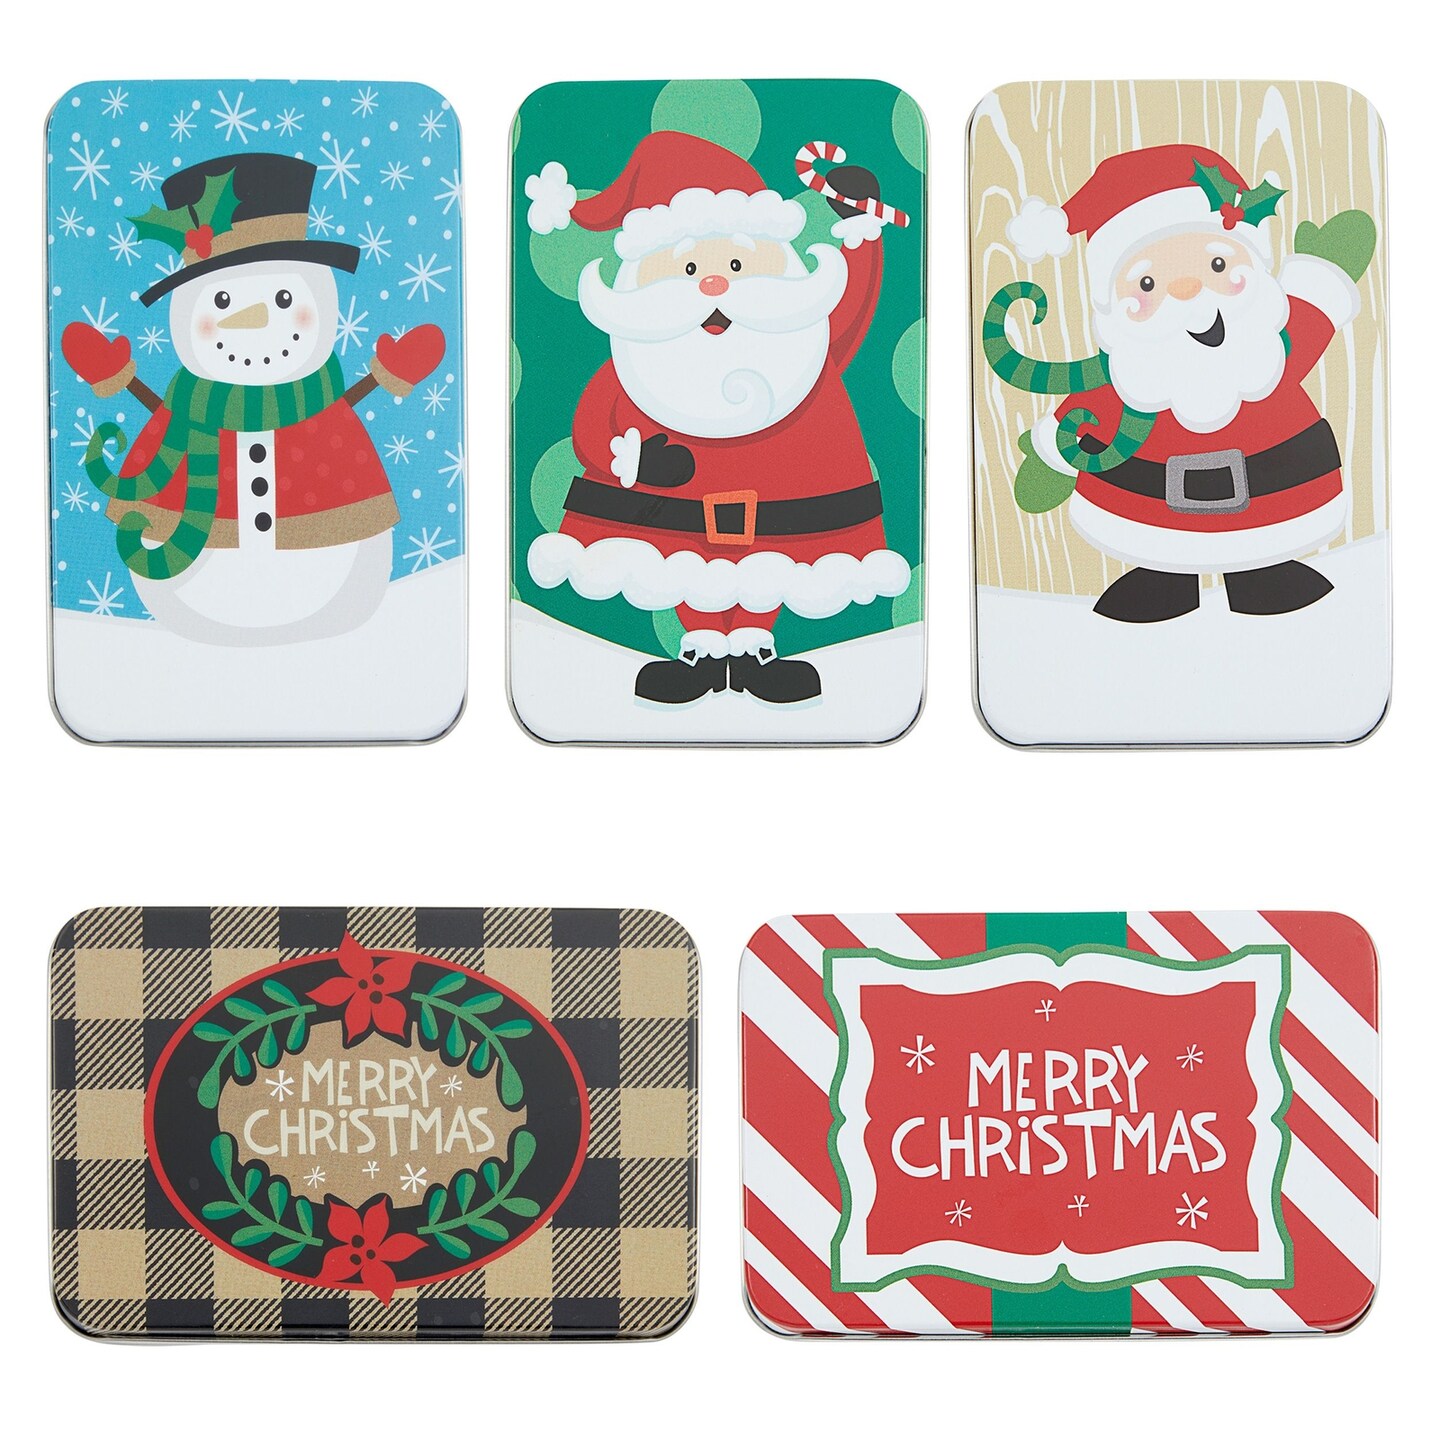  MGparty16 PCS Christmas Gift Card Tin Holder Boxes Unique Gift  Card Tin Boxes Holders with Lids for Christmas Holiday Gift Box Set, Xmas  Party Favors : Health & Household